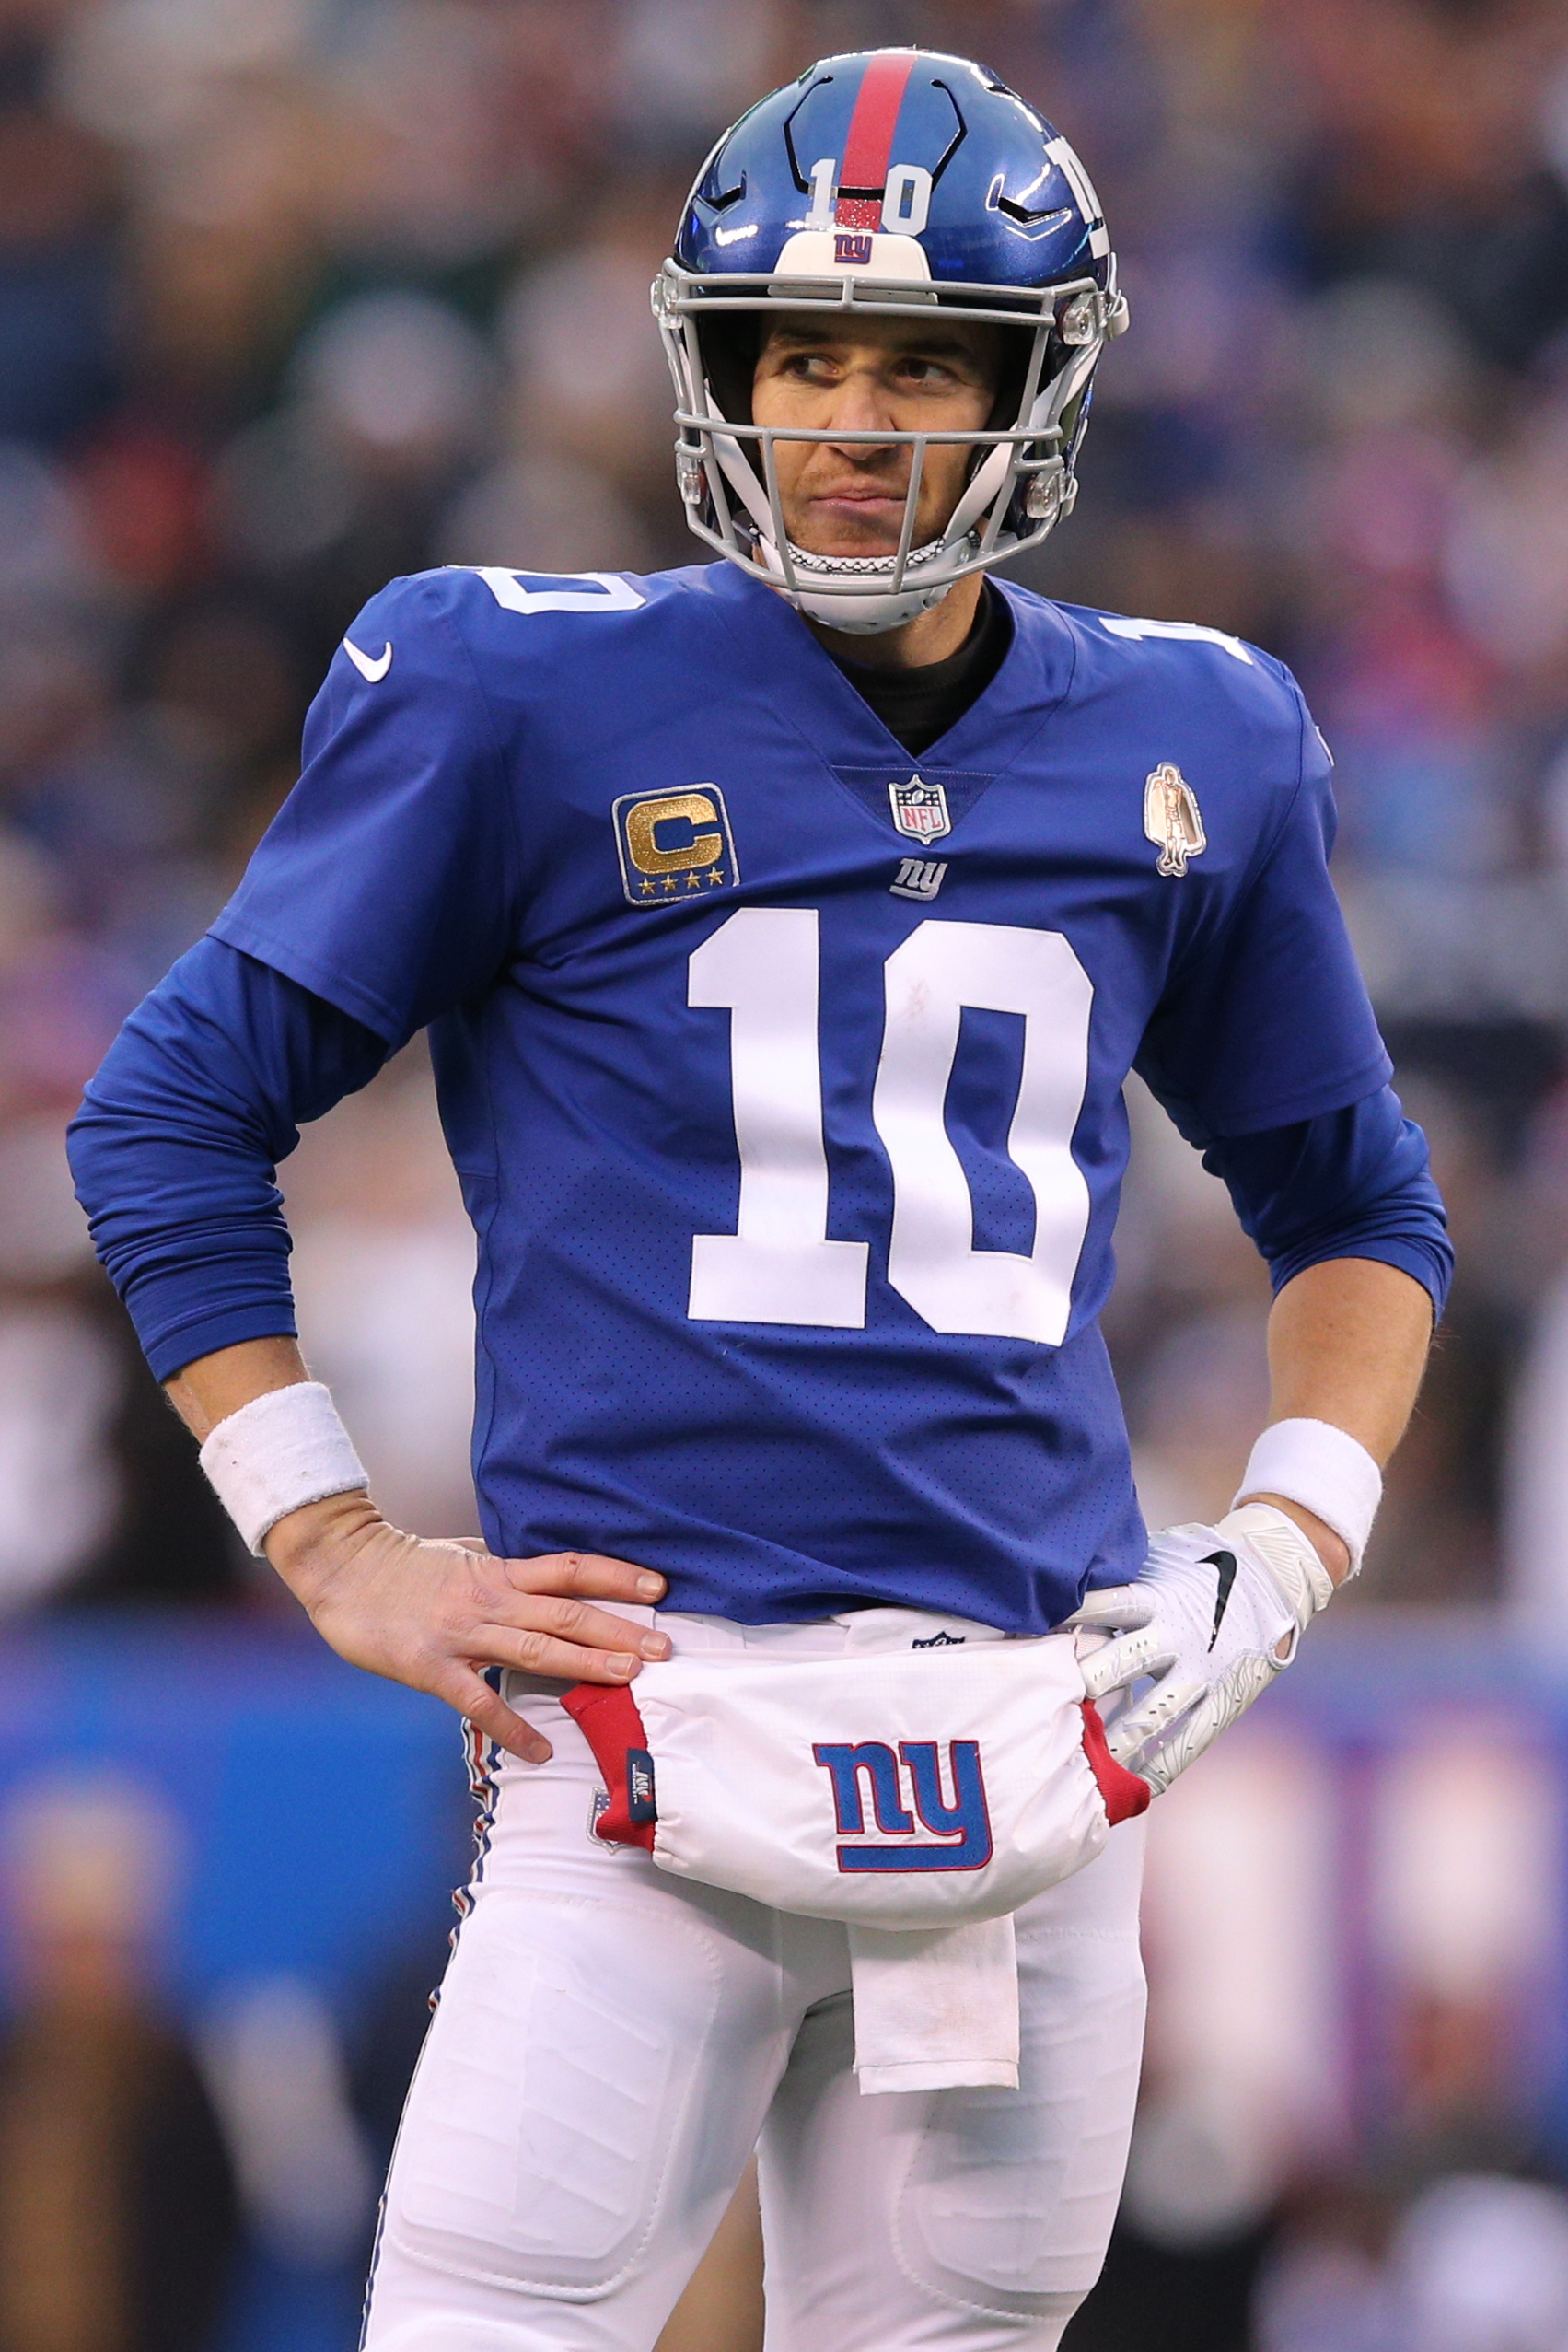 Latest On Giants, Eli Manning